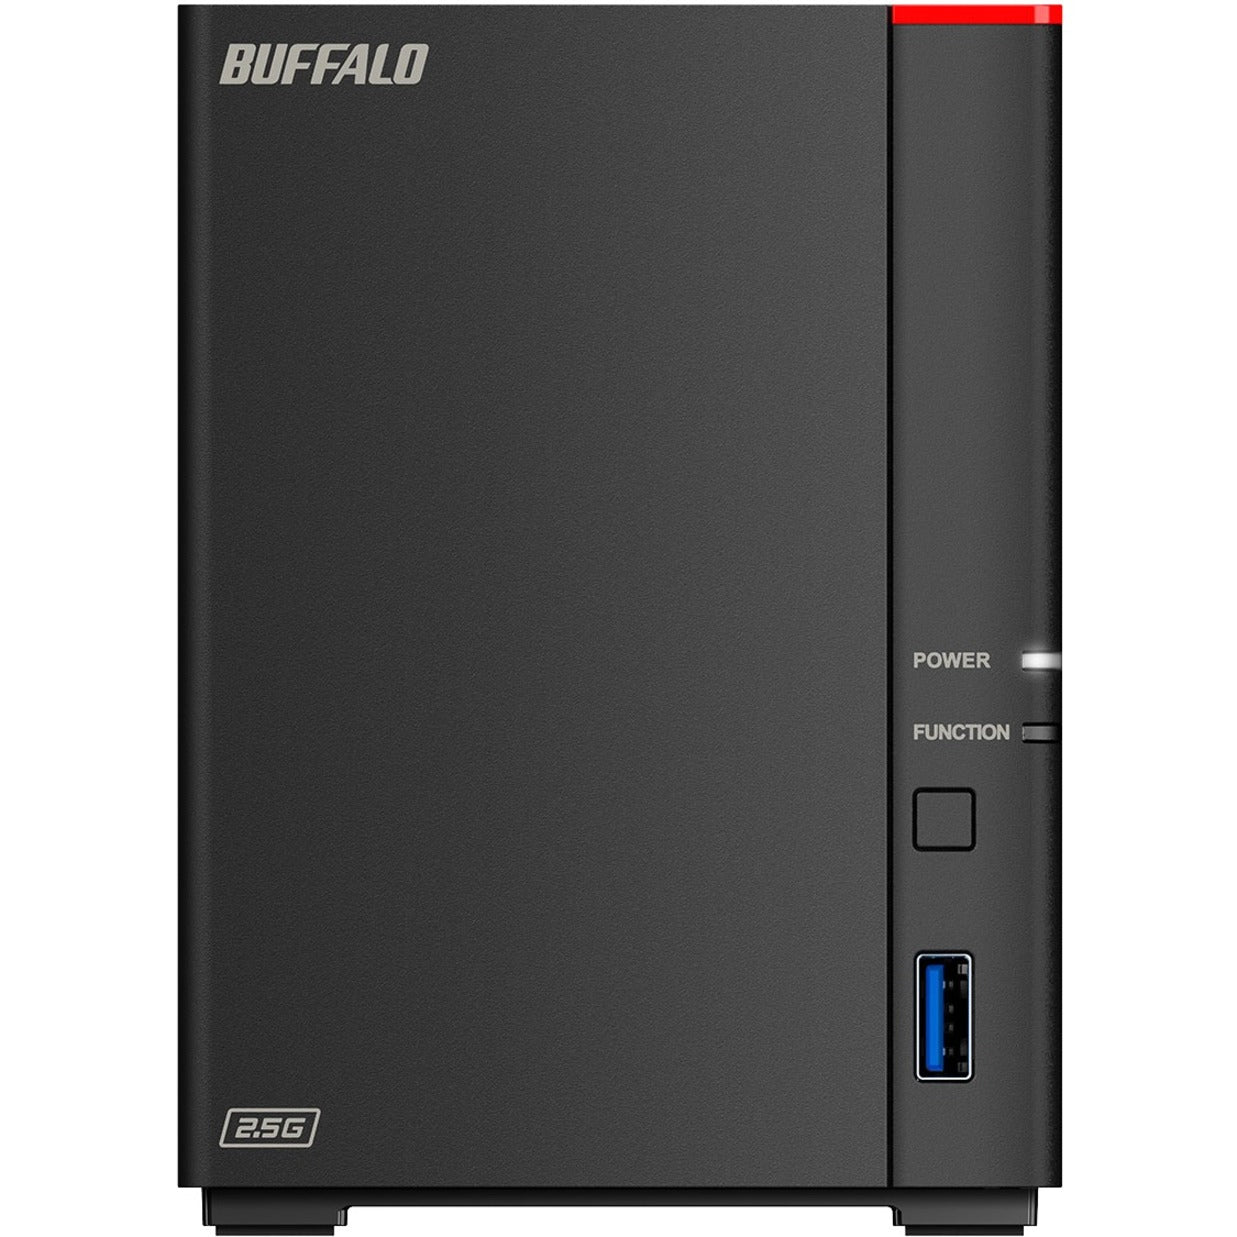 Buffalo LS720D1602B LinkStation SoHo 720DB 16TB Hard Drives Included (2 x 8TB, 2 Bay), 3 Year Warranty